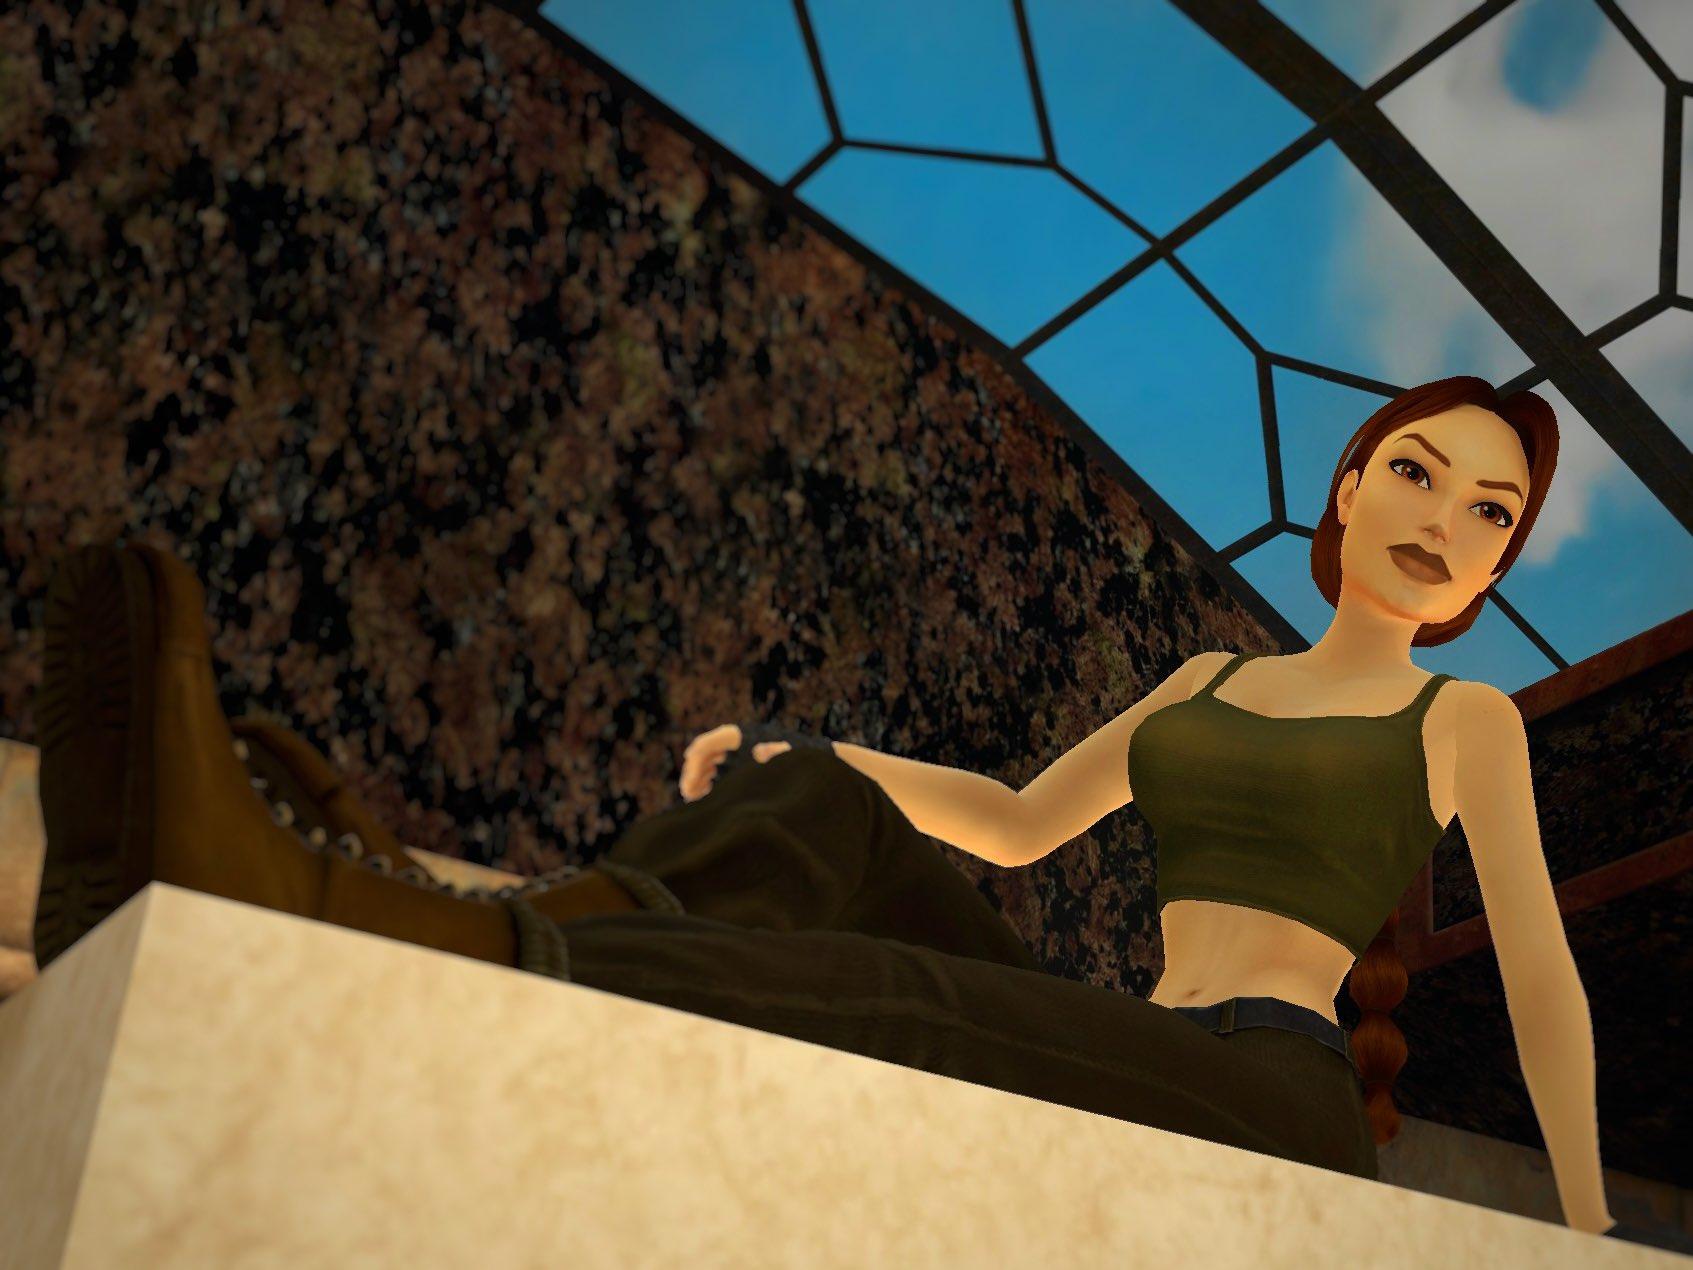 Photo Mode screenshot of Lara Croft sitting by her pool in Tomb Raider I-III Remastered.